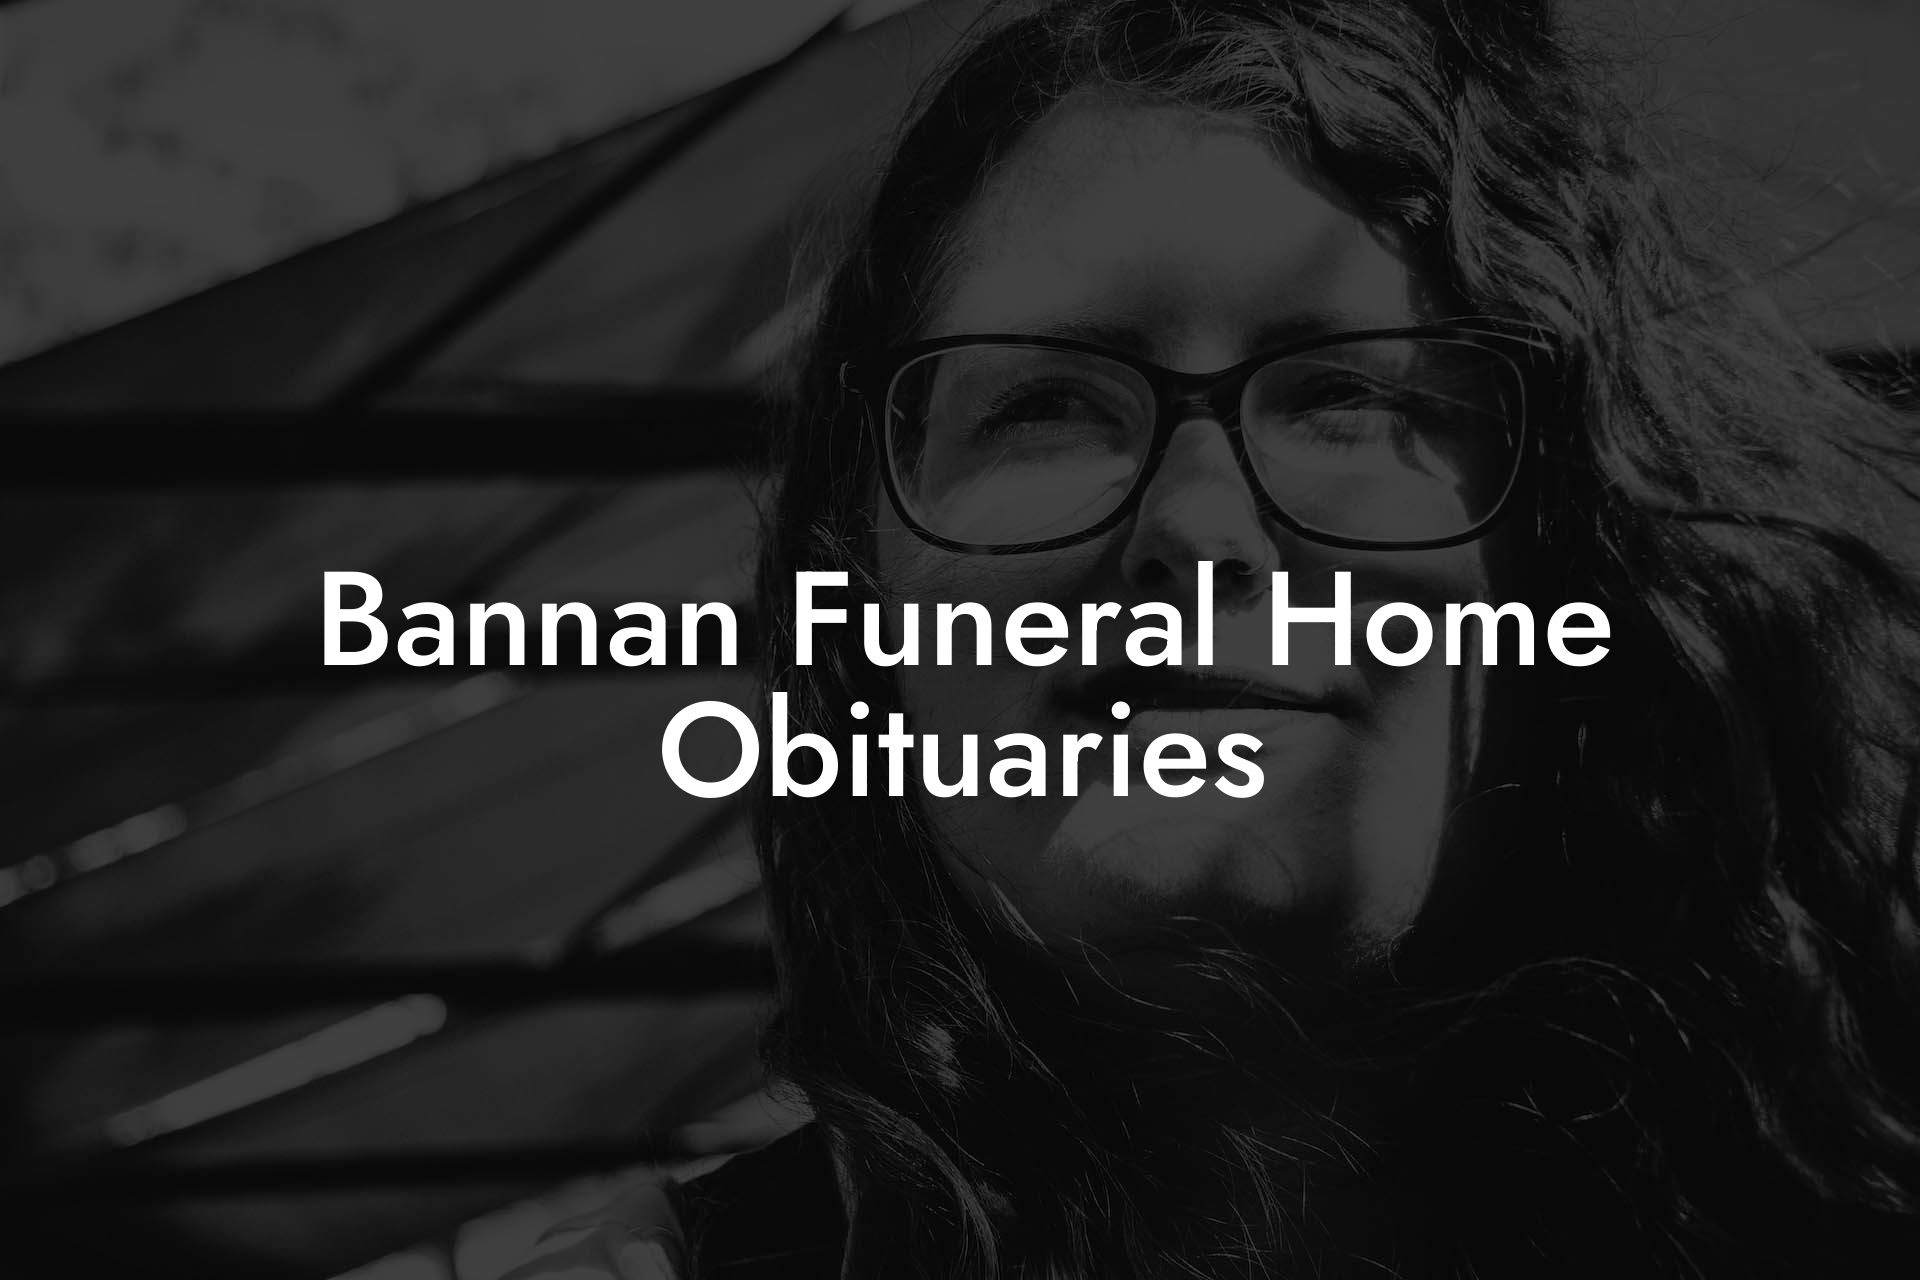 Bannan Funeral Home Obituaries